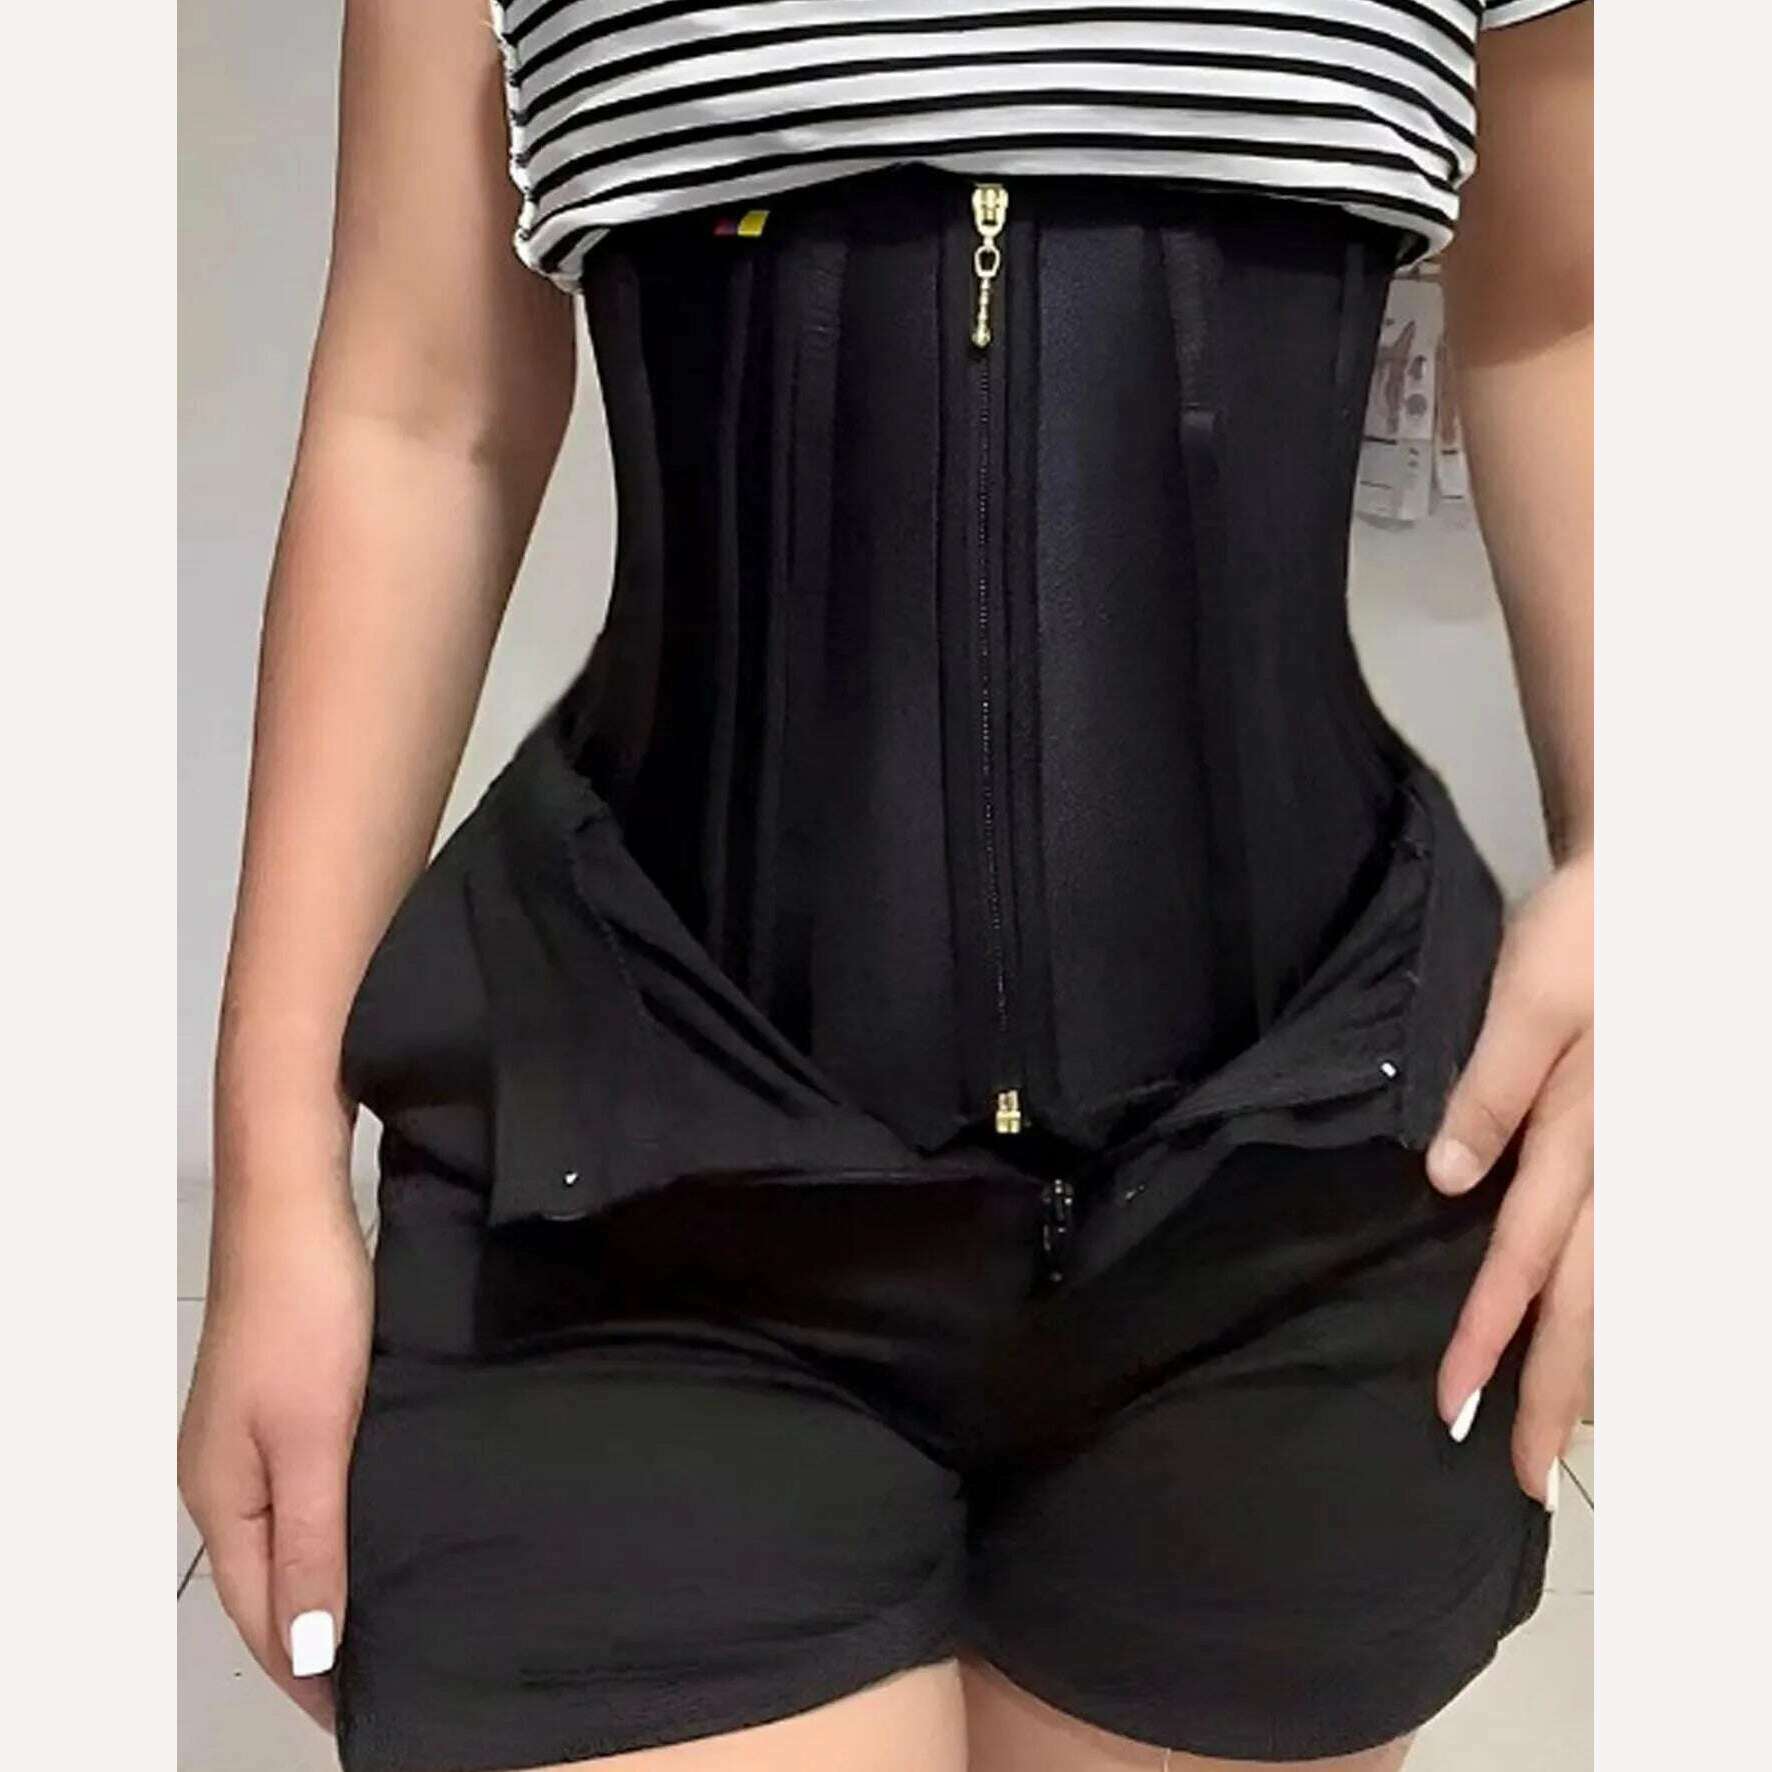 KIMLUD, Waist Trainer Belly Slimming Belt Body Shaper Modeling Strap Fajas Colombianas Shaping Corset Binder Shapewear for Women, black / XXL, KIMLUD Womens Clothes